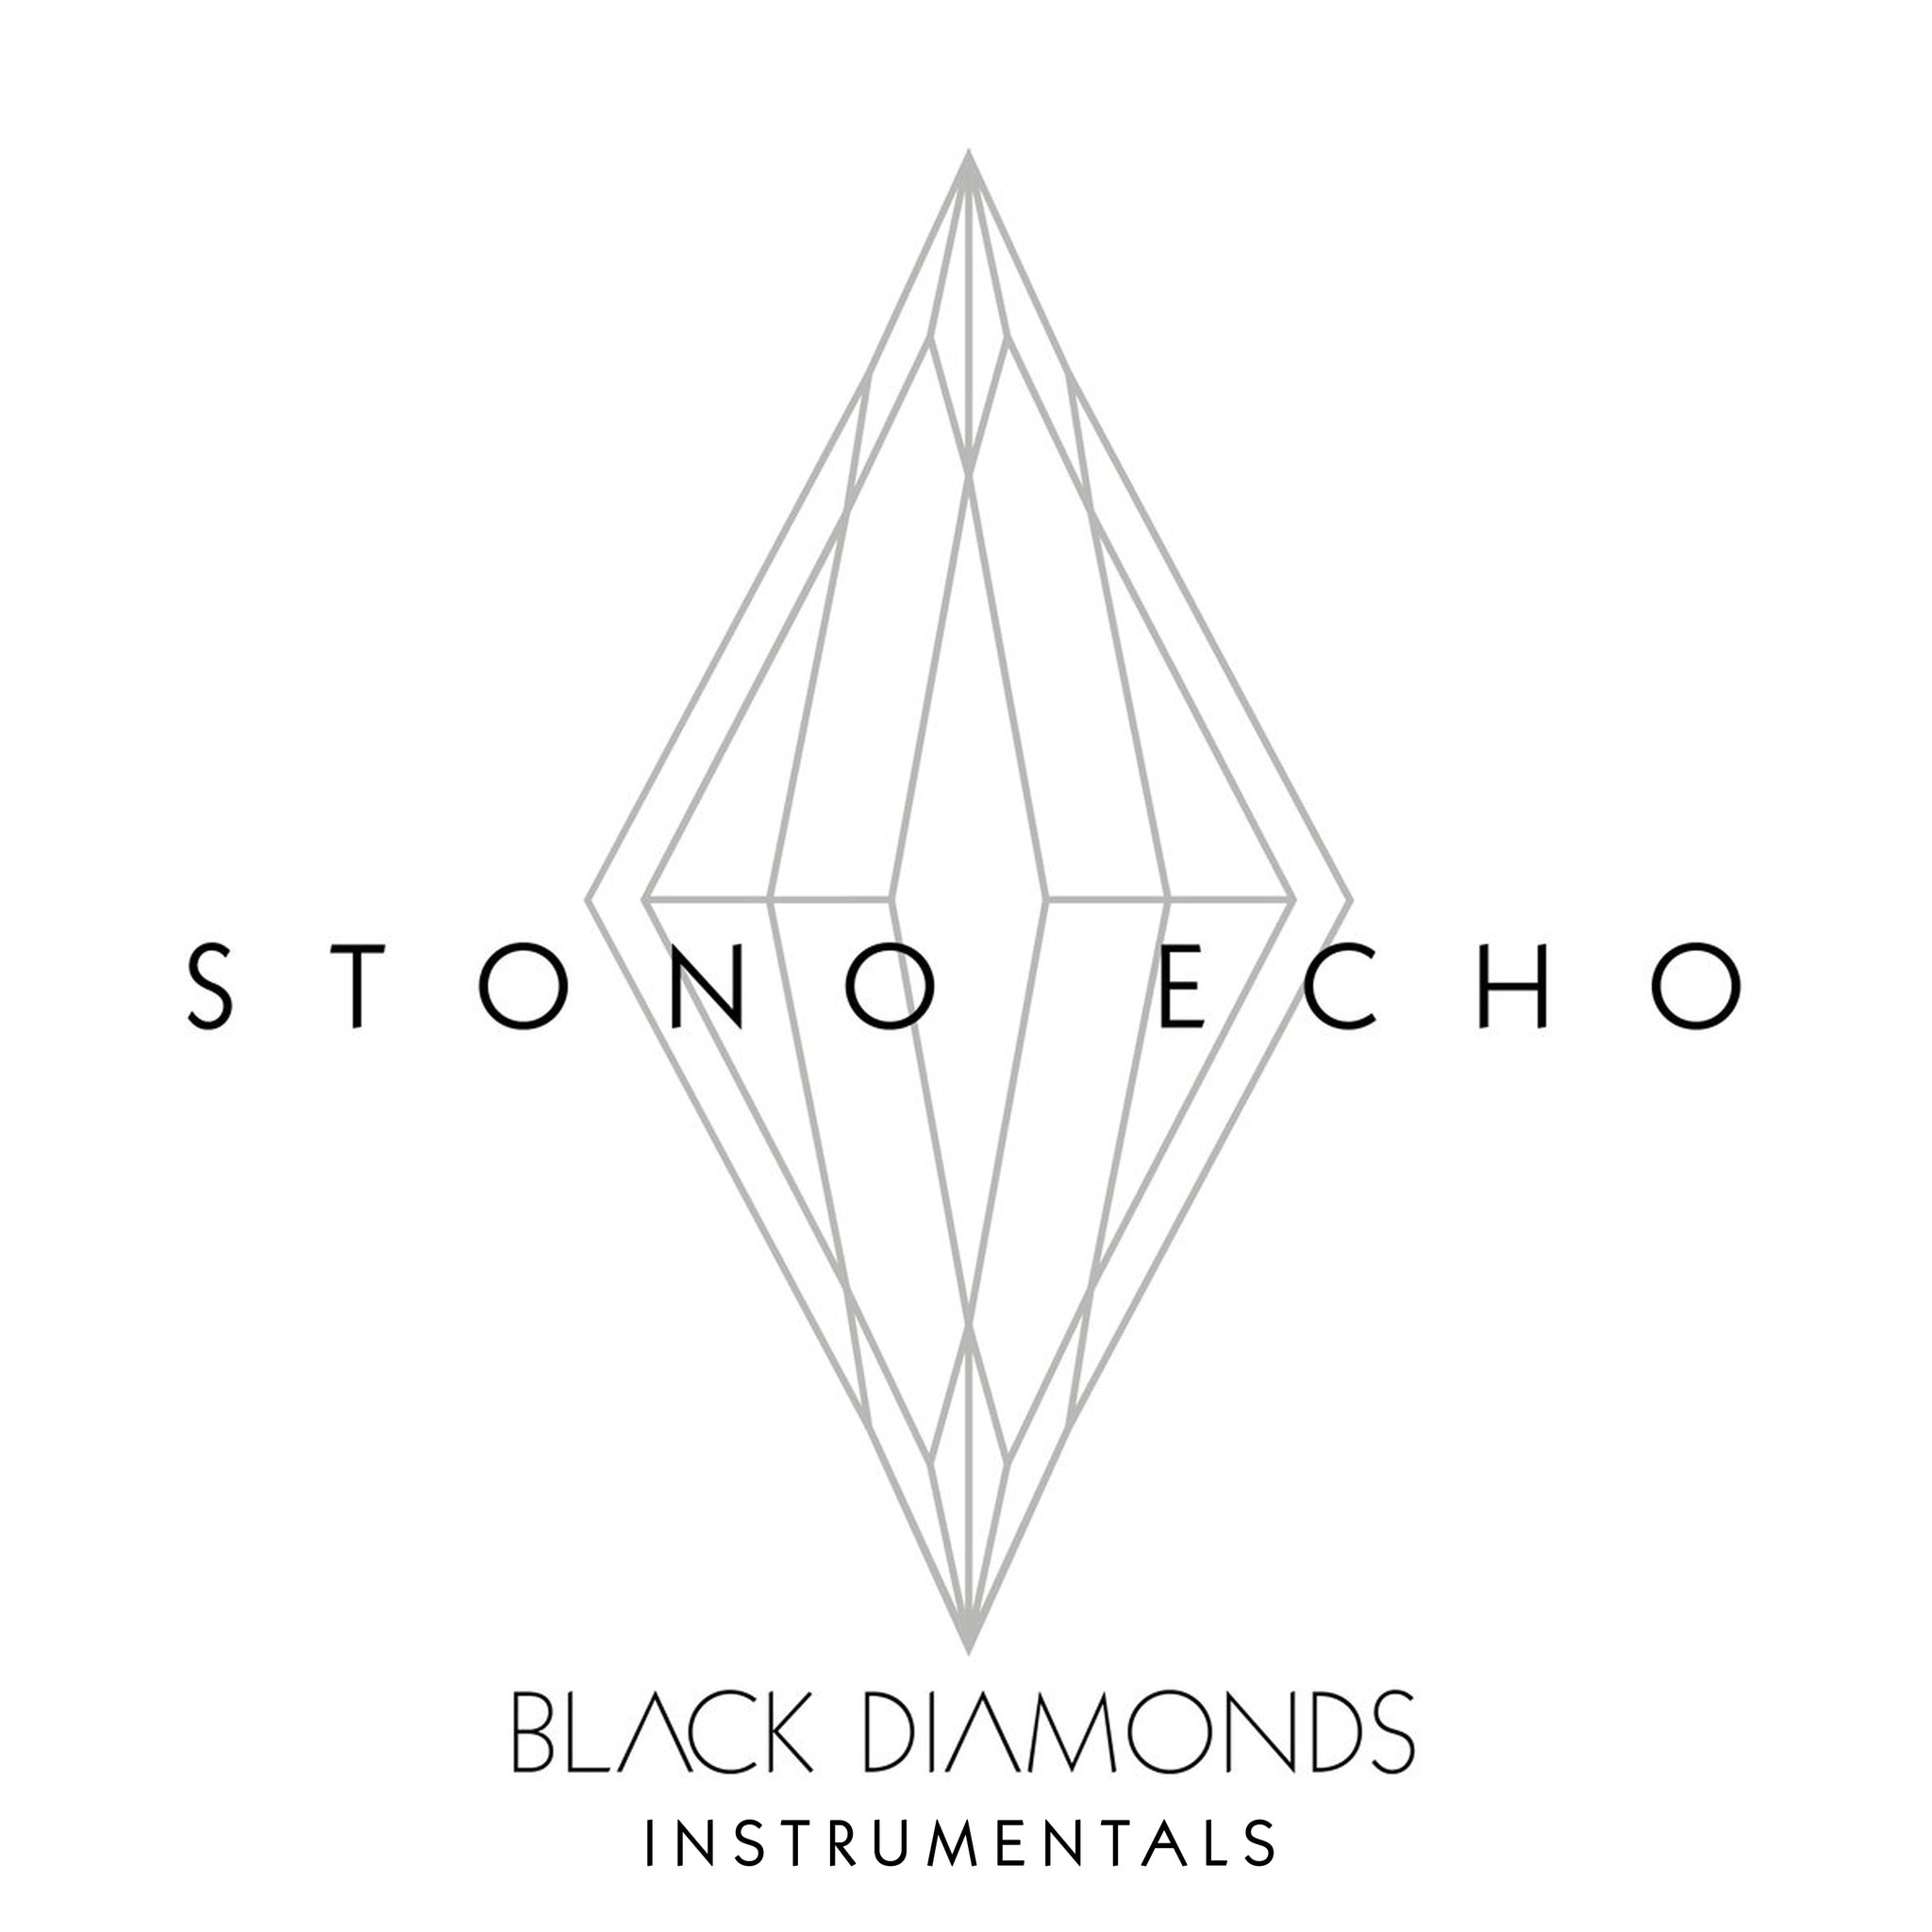 Stono Echo - Black Diamonds (Instrumentals)